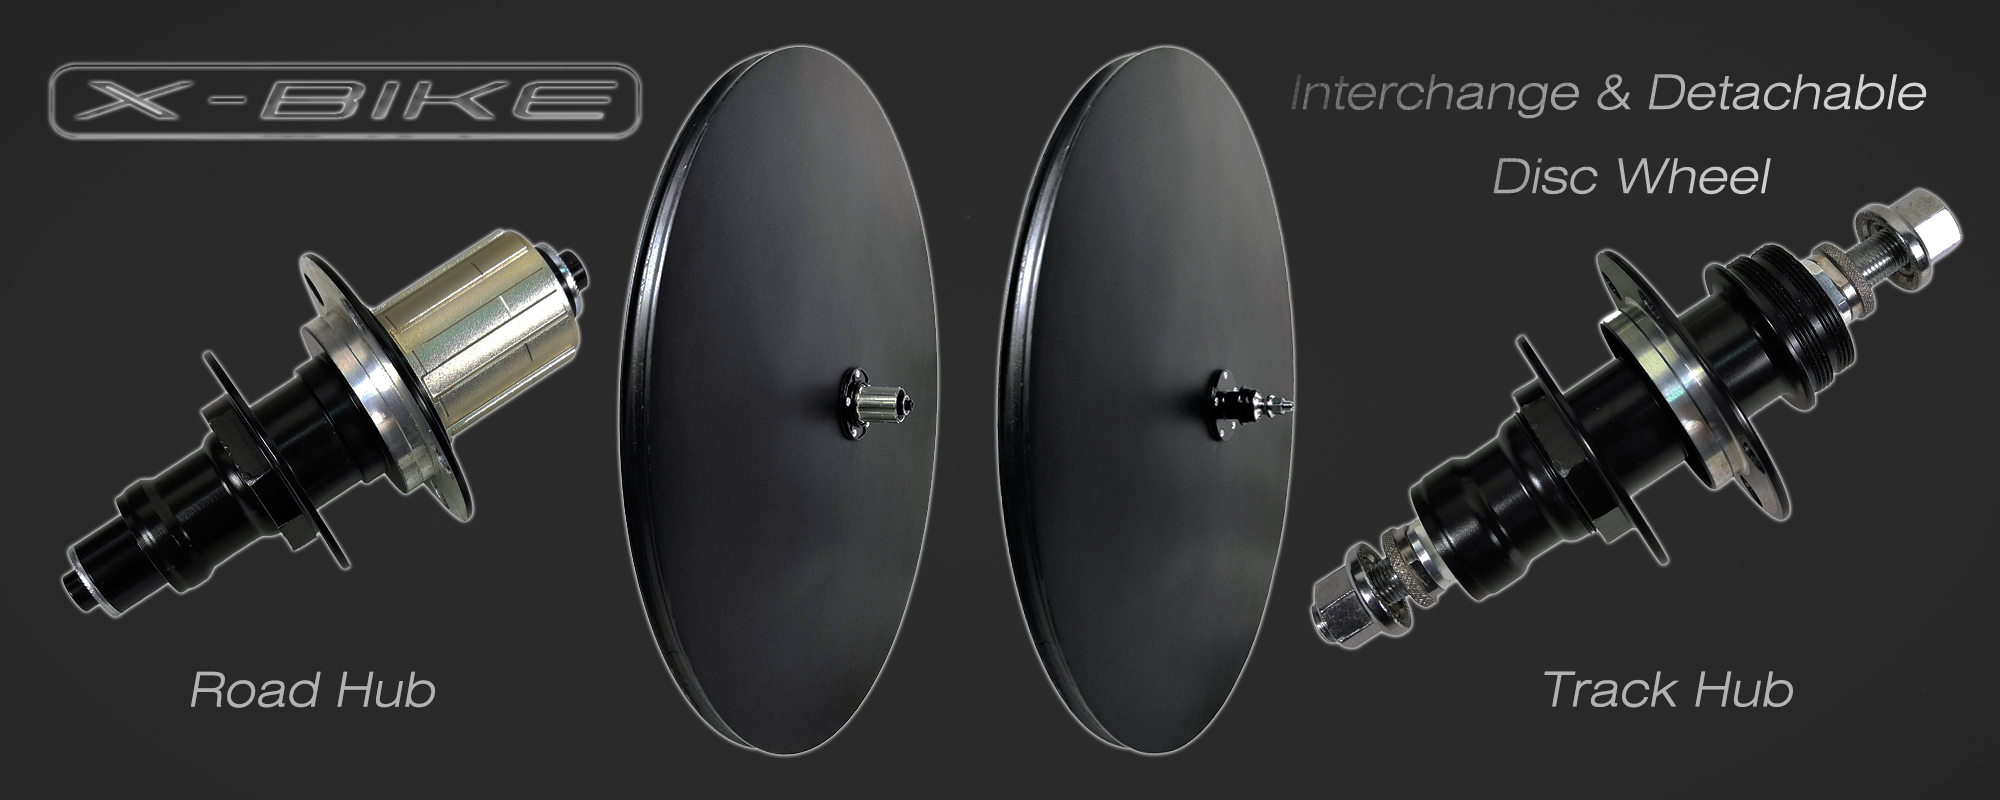 Interchange & detachable disc wheel